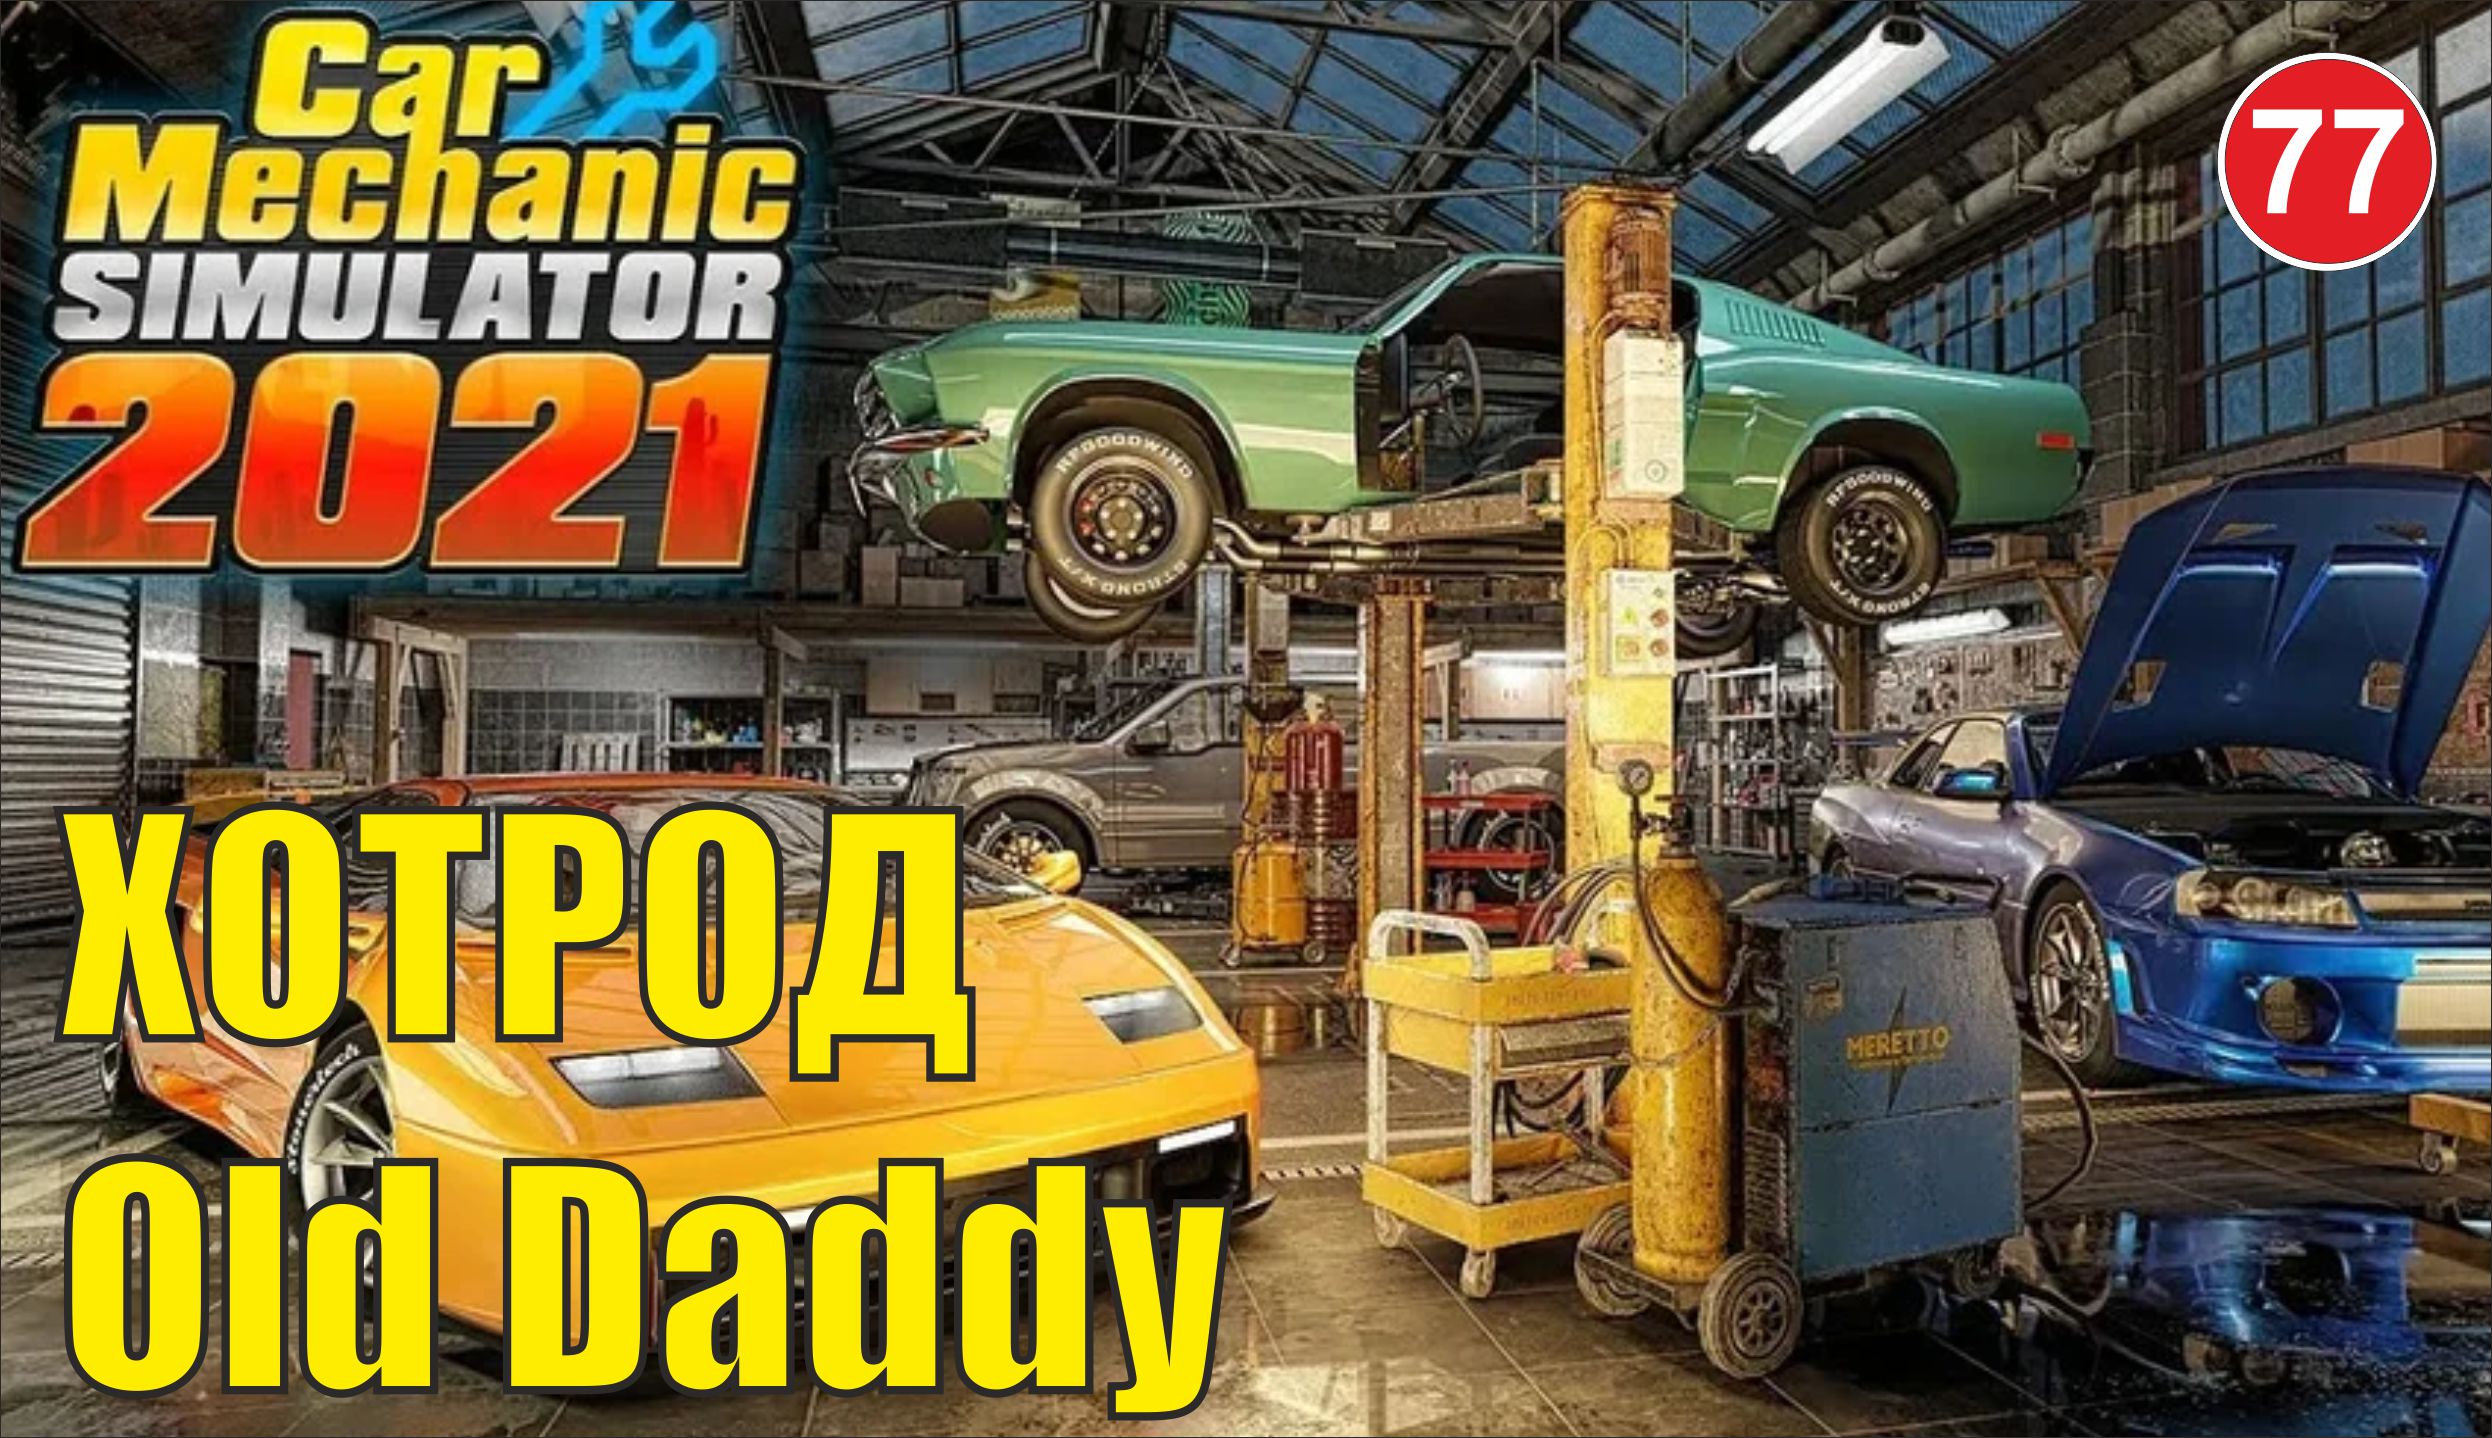 Car Mechanic Simulator 2021 - Хотрод Old Daddy